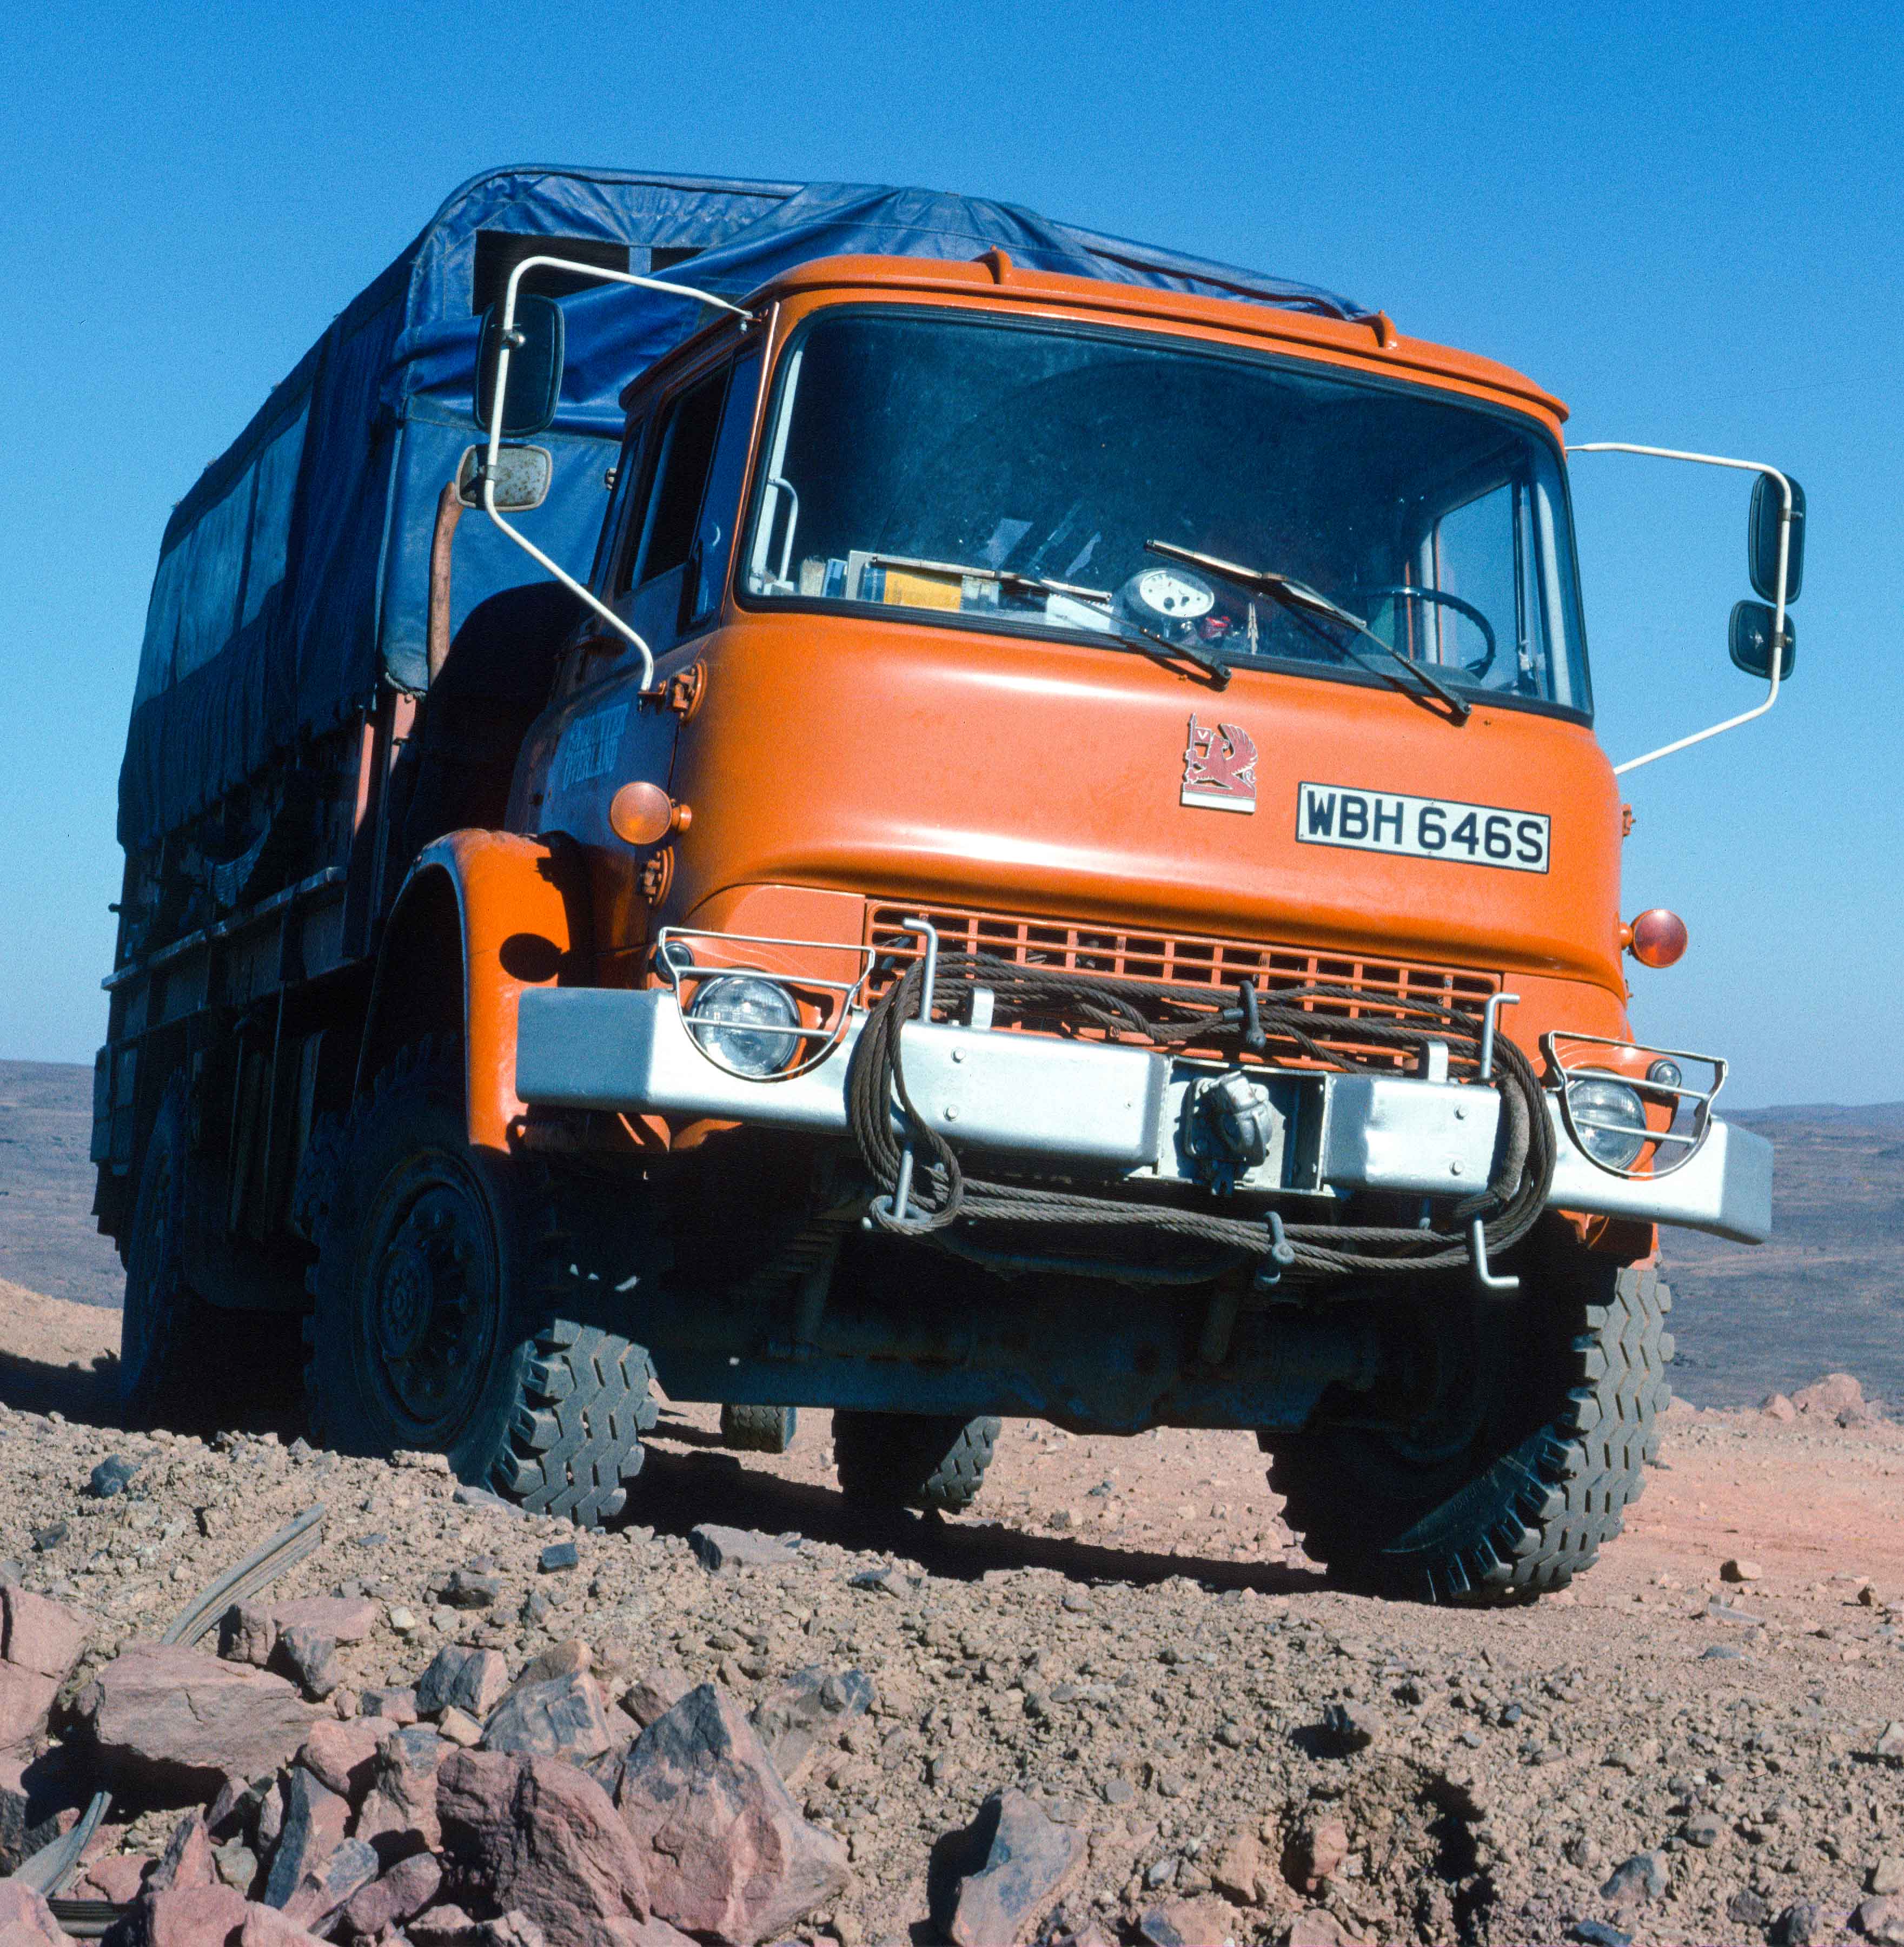 EO_Truck_on_dirt_road_in_Sahara_1M.jpg